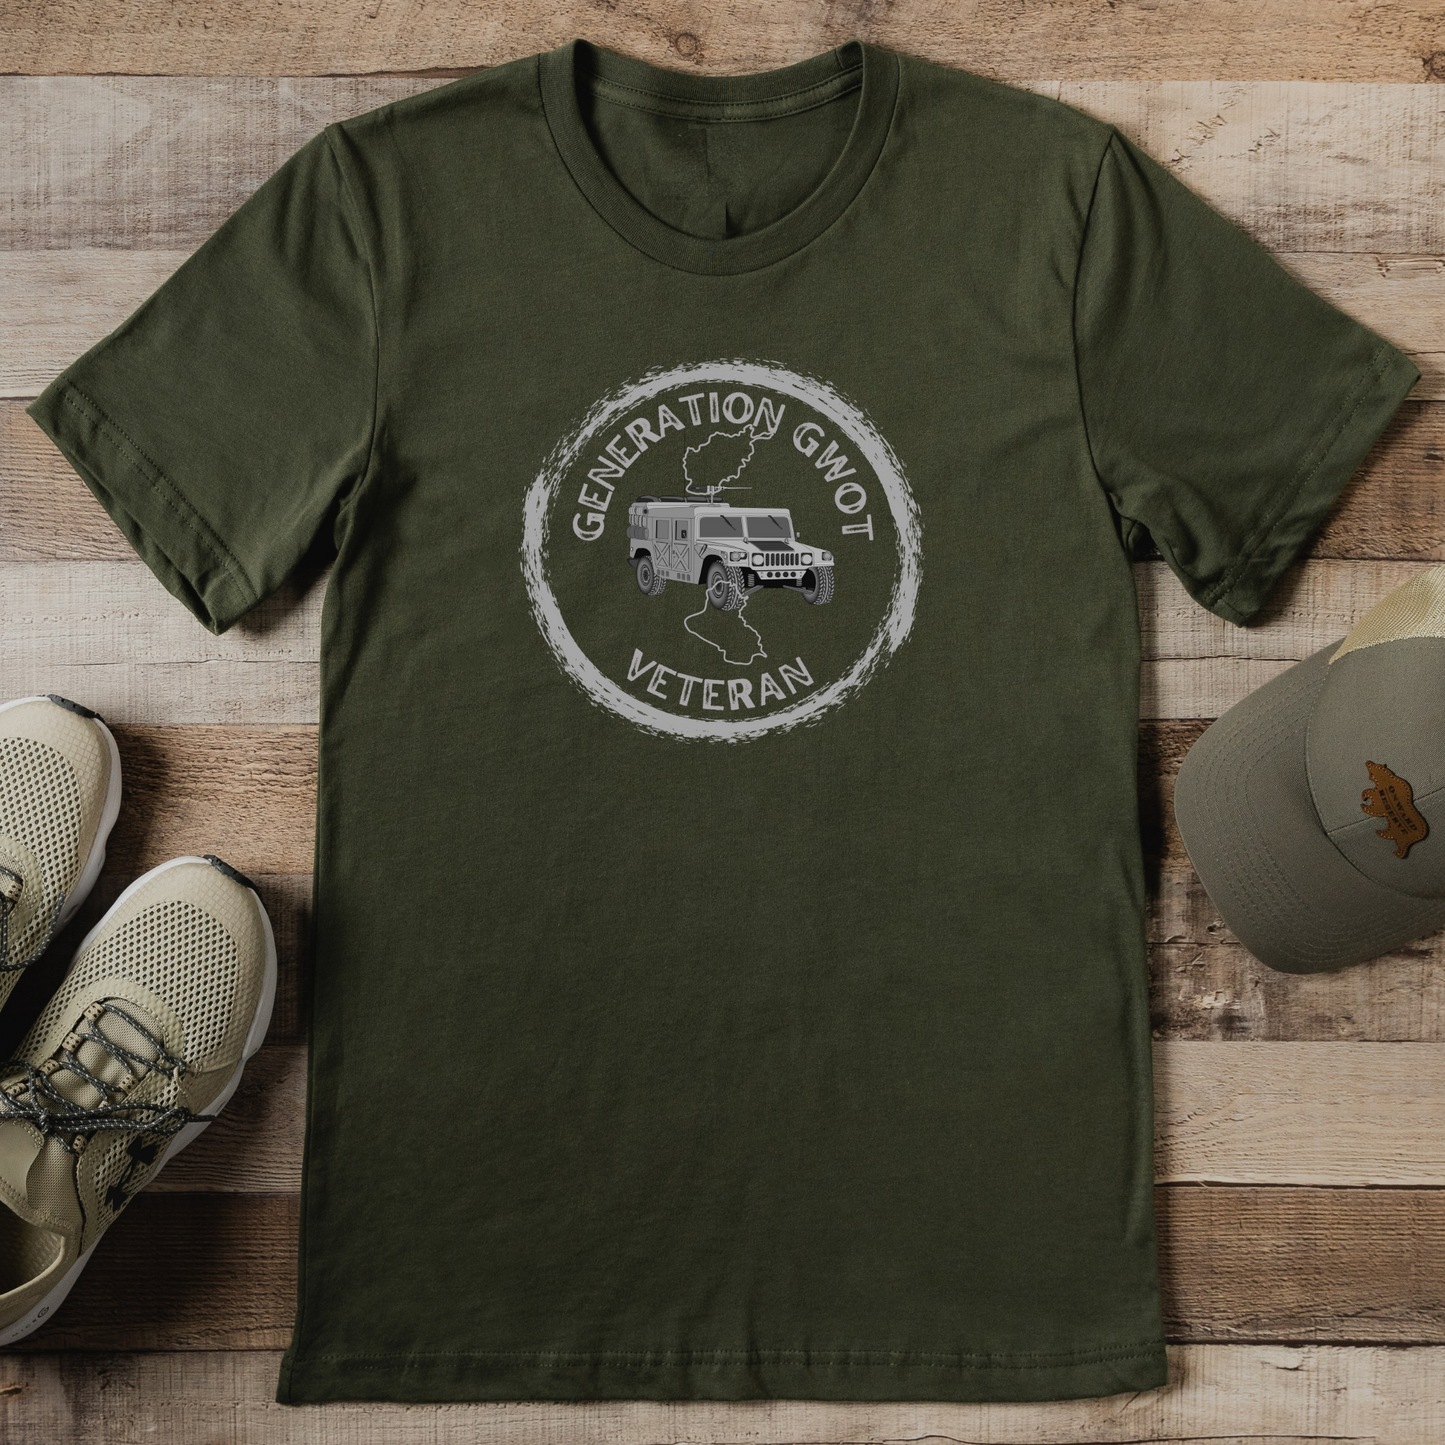 Generation GWOT Veteran Shirt, Global War on Terrorism T-Shirt